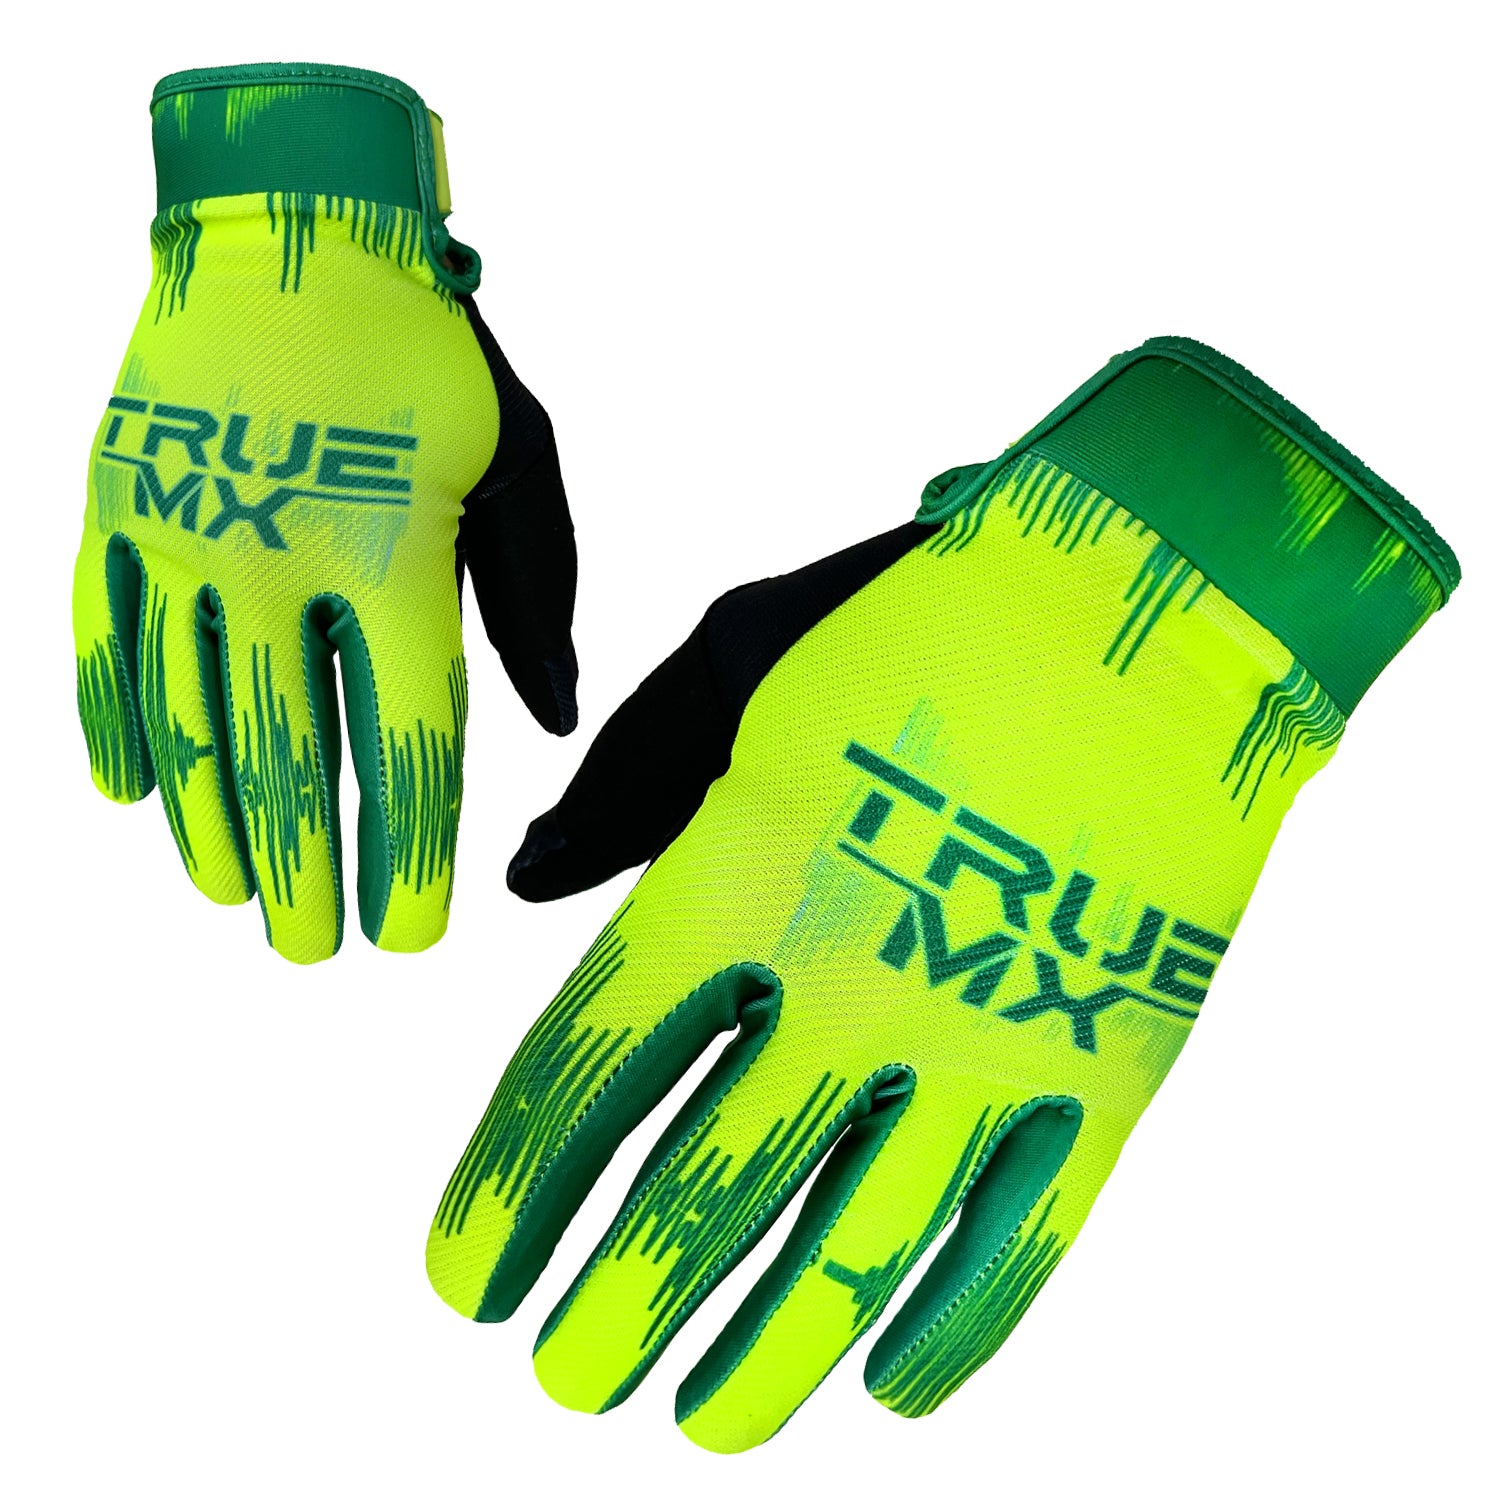 2023 TrueMX TRILOGY glove - FLO / GREEN